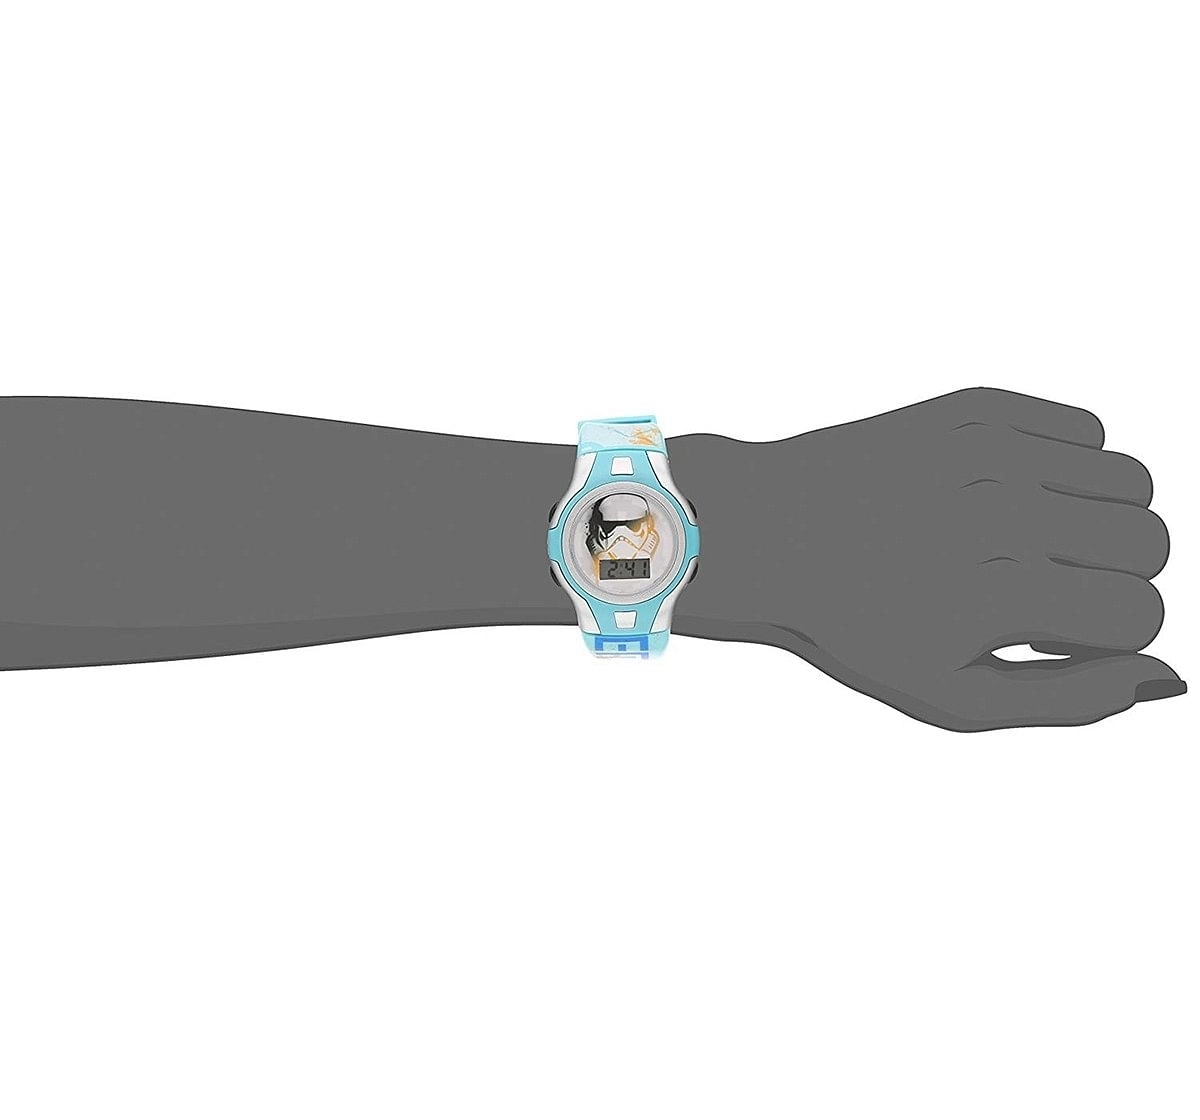 Star Wars Digital Wrist Watch-Novelty for Kids age 3Y+ (Blue)